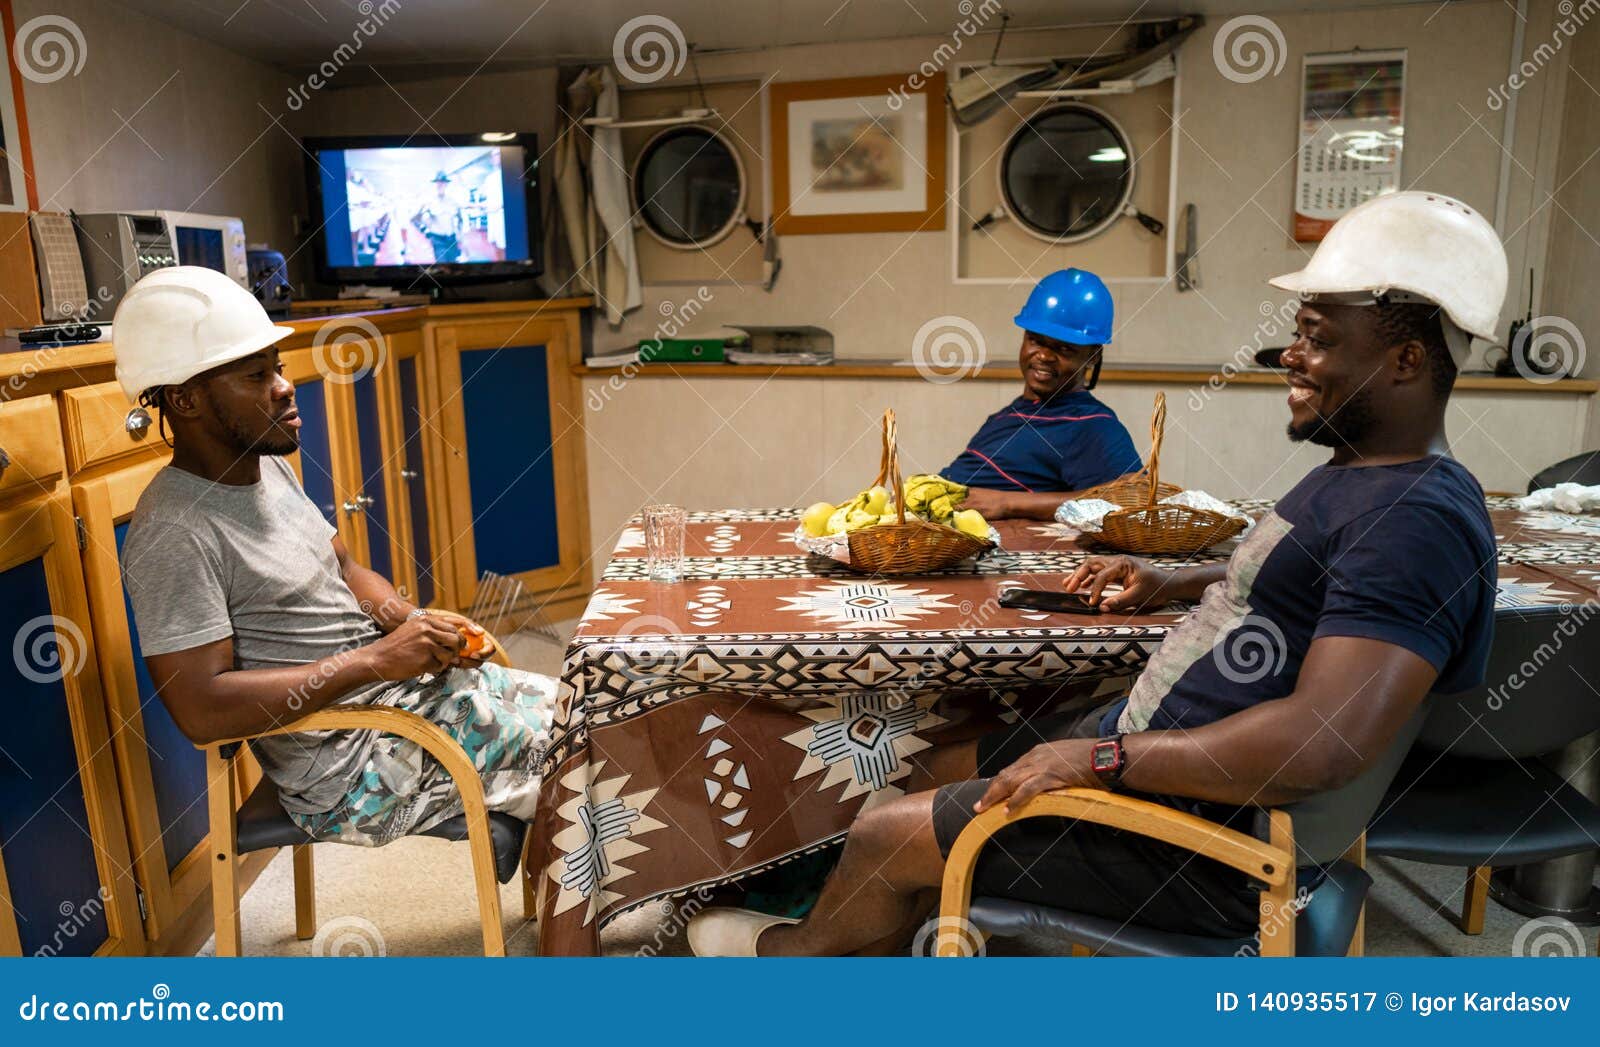 seamen crew onboard a ship or vessel having fun watching tv